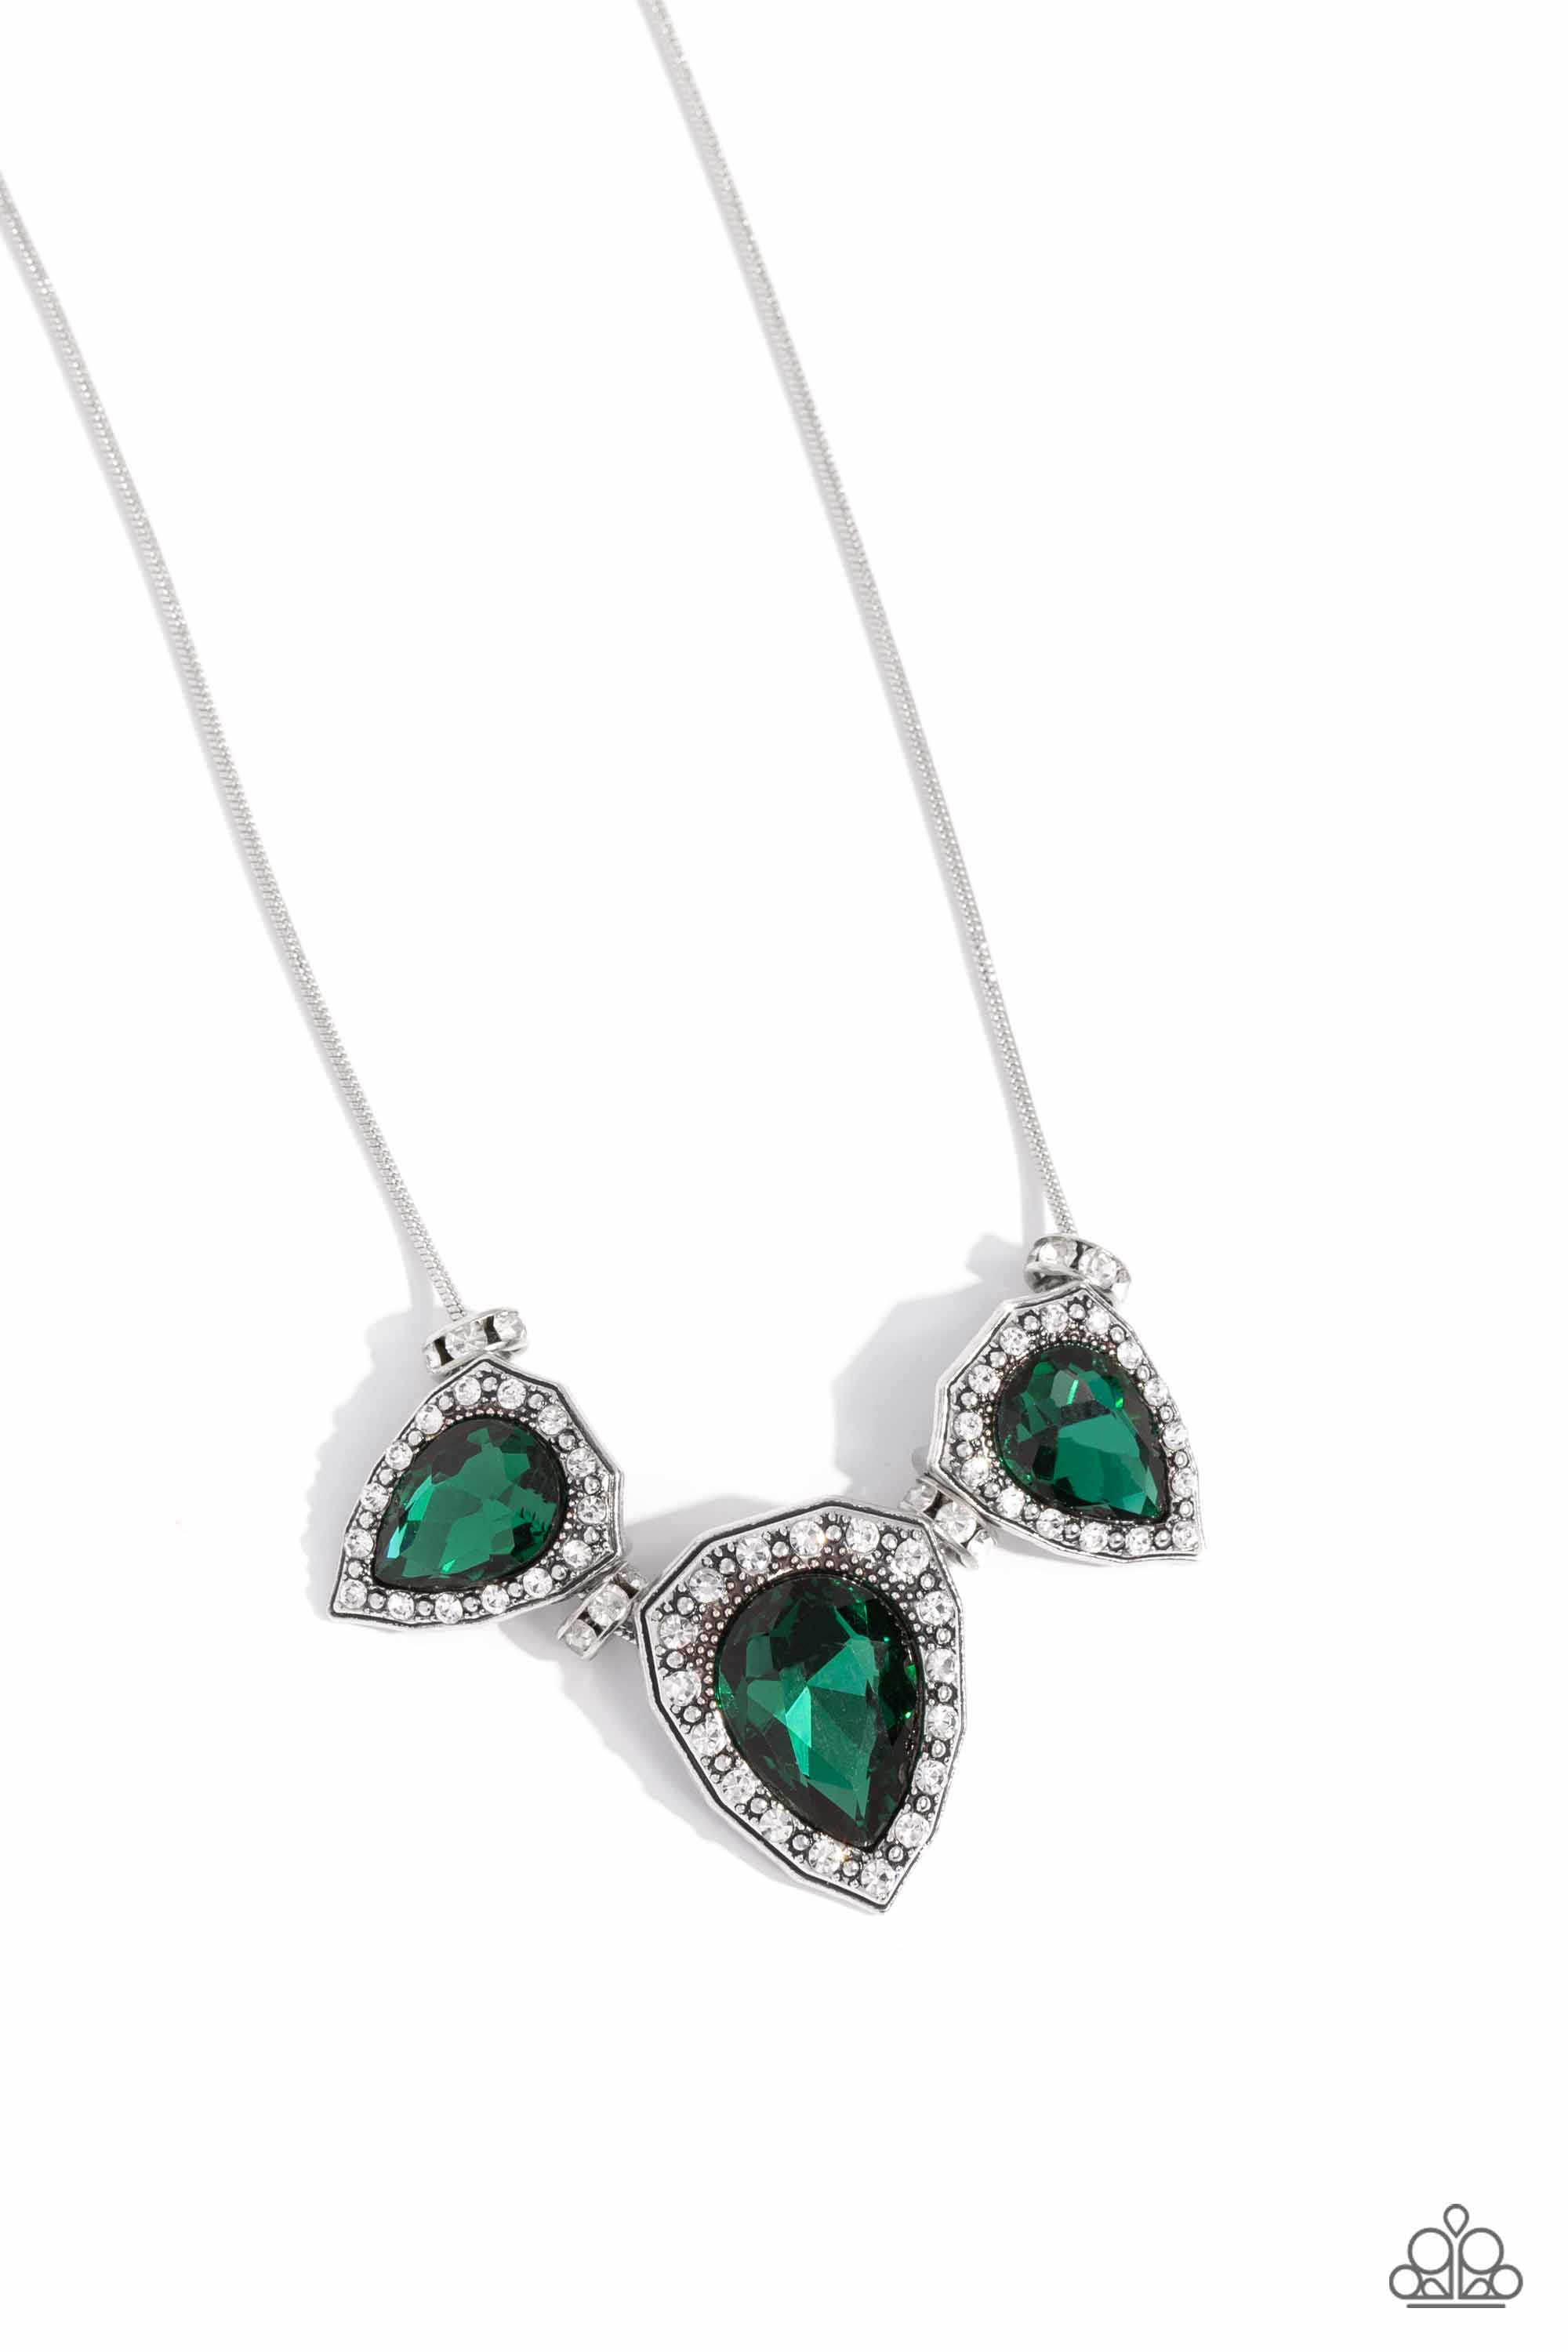 Majestic Met Ball Green Rhinestone Necklace - Paparazzi Accessories- lightbox - CarasShop.com - $5 Jewelry by Cara Jewels